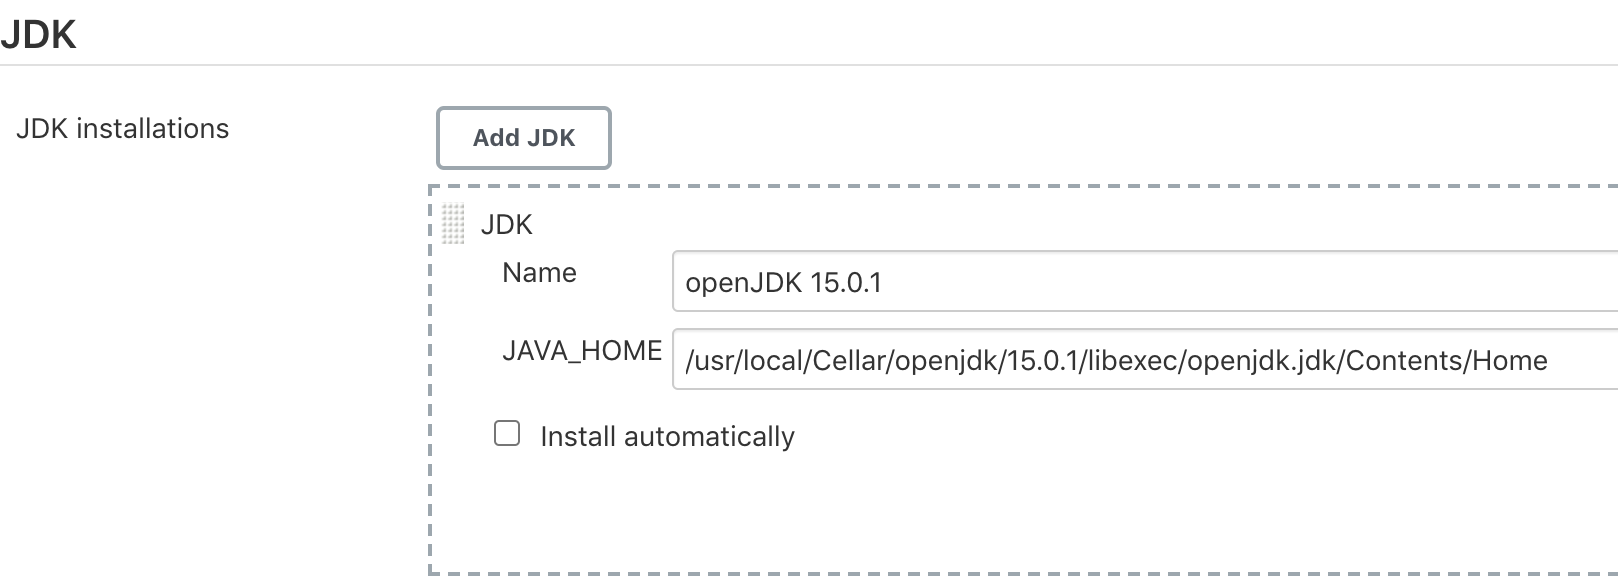 Configuring JAVA_HOME in Jenkins